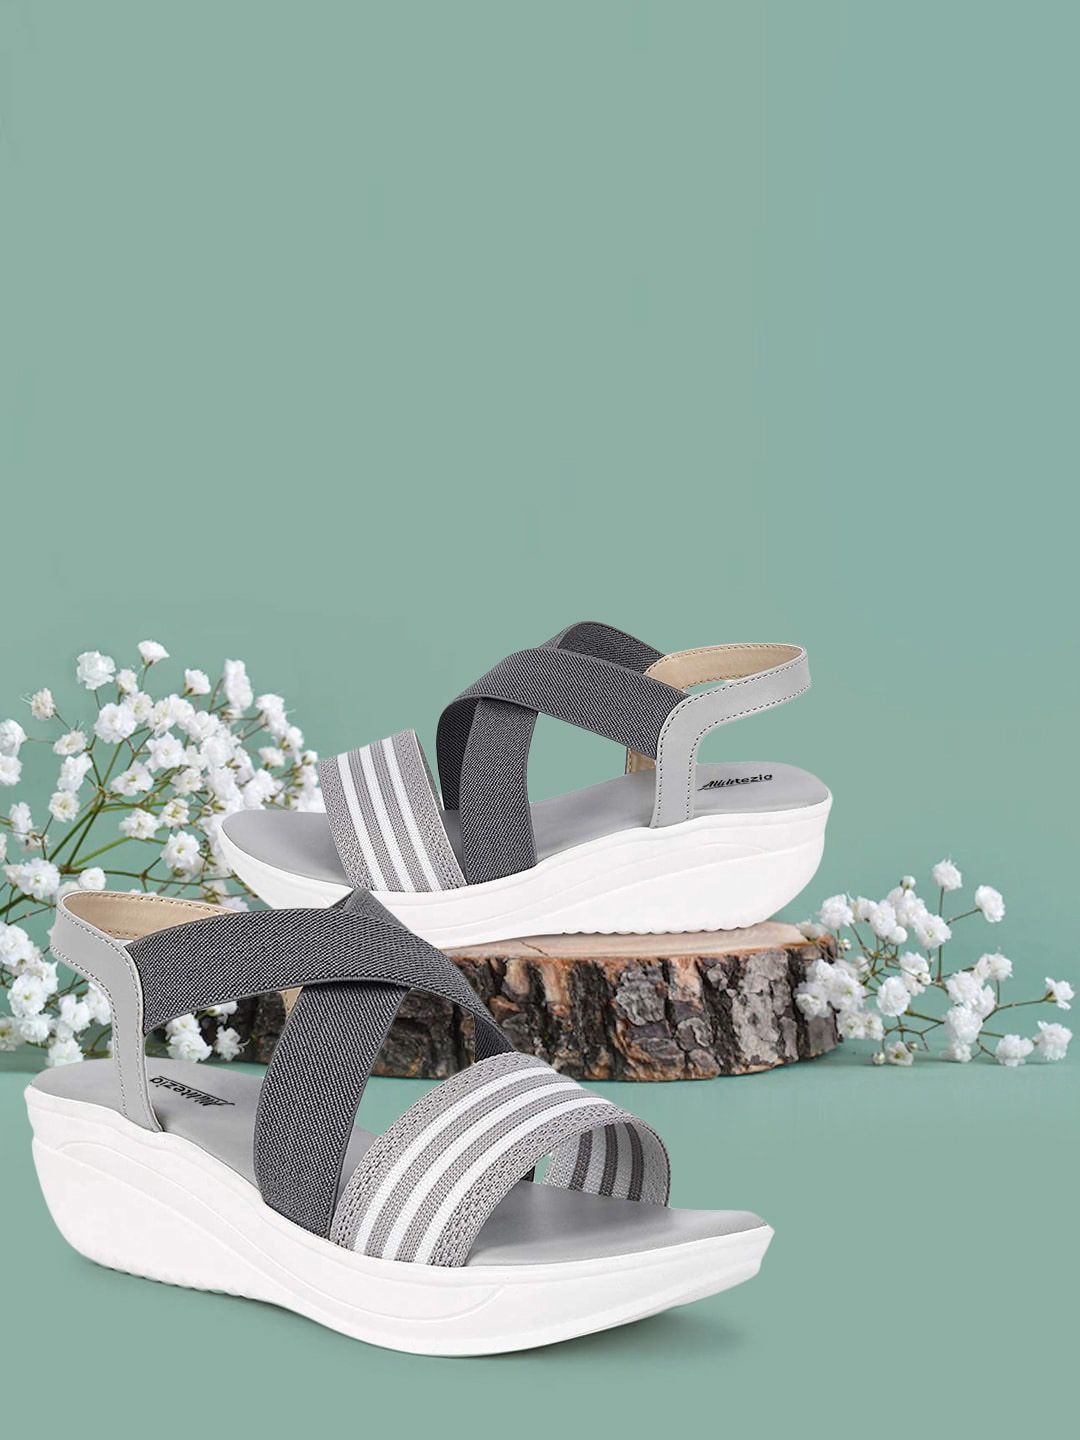 Alishtezia Grey Embellished PU Wedge Sandals with Tassels Price in India